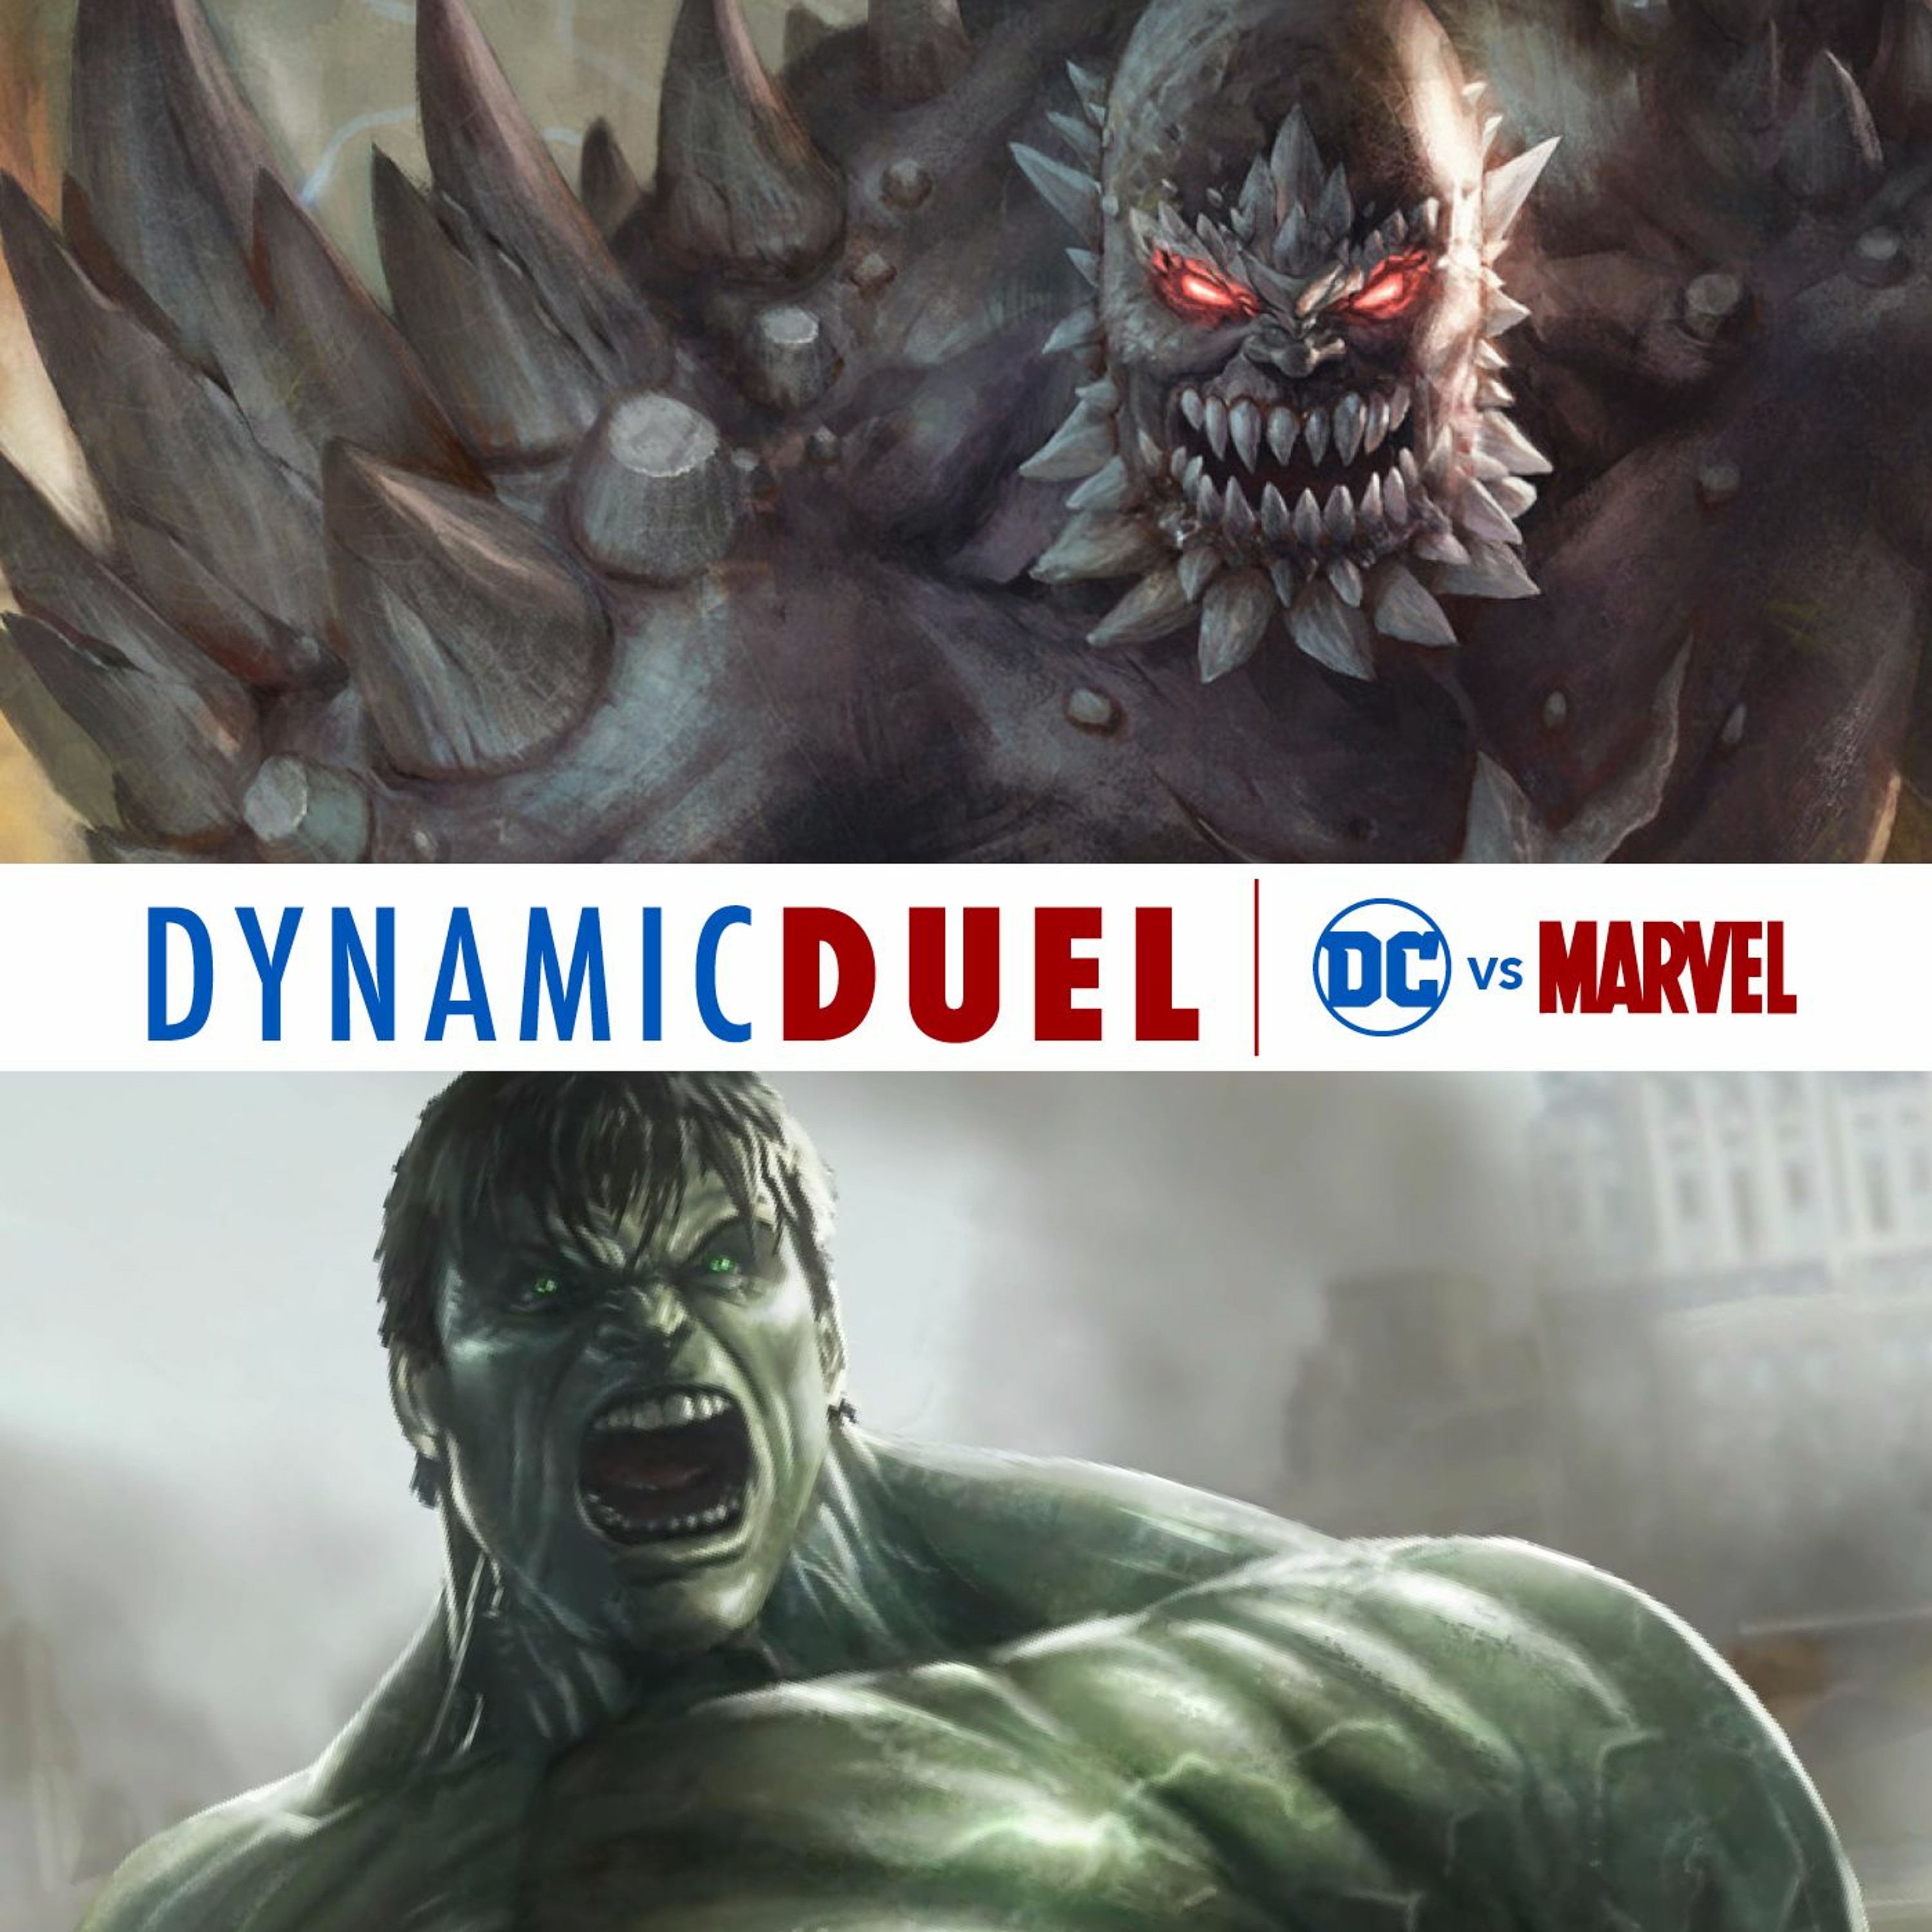 Doomsday vs Hulk Image